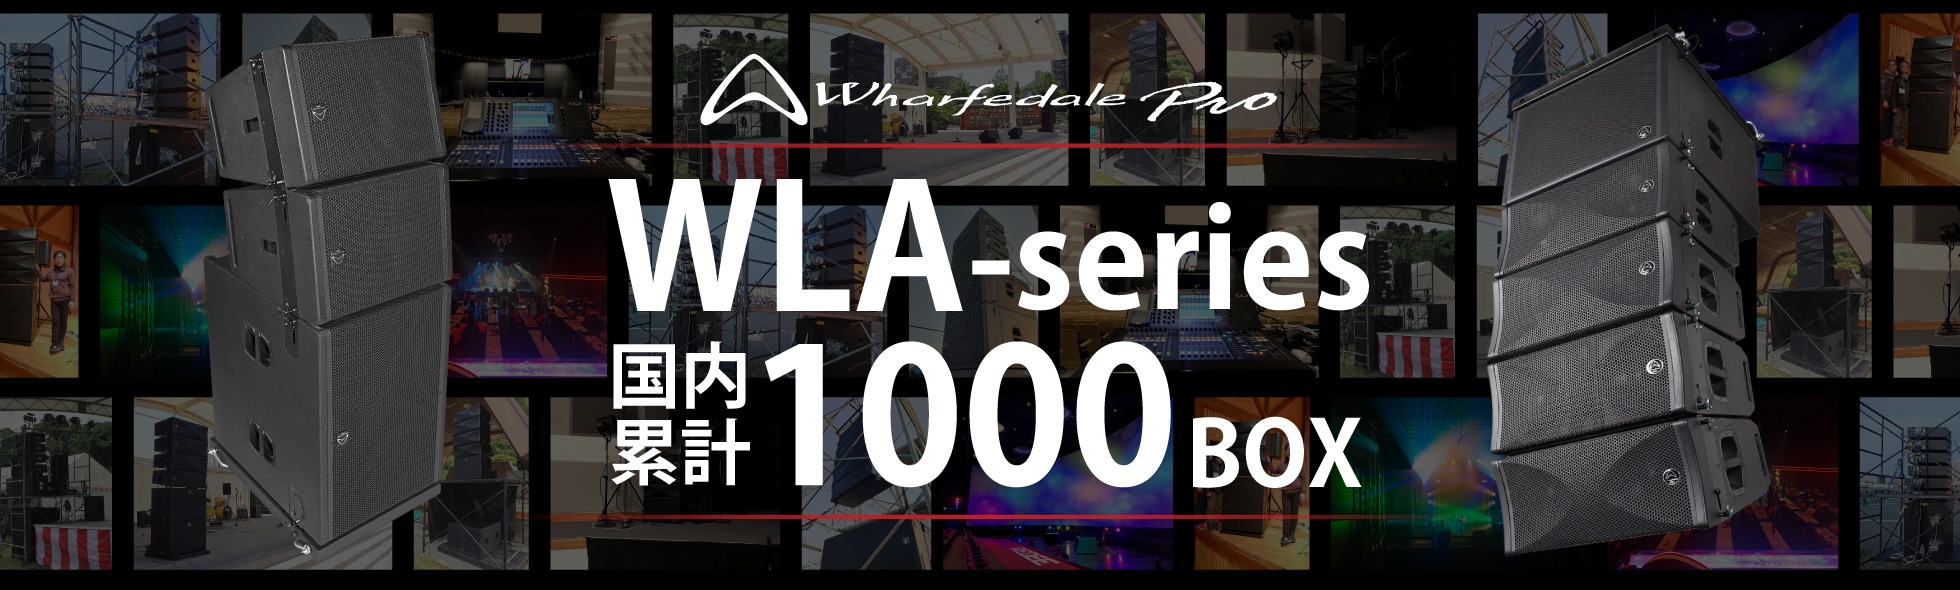 WLA-series_1000BOX